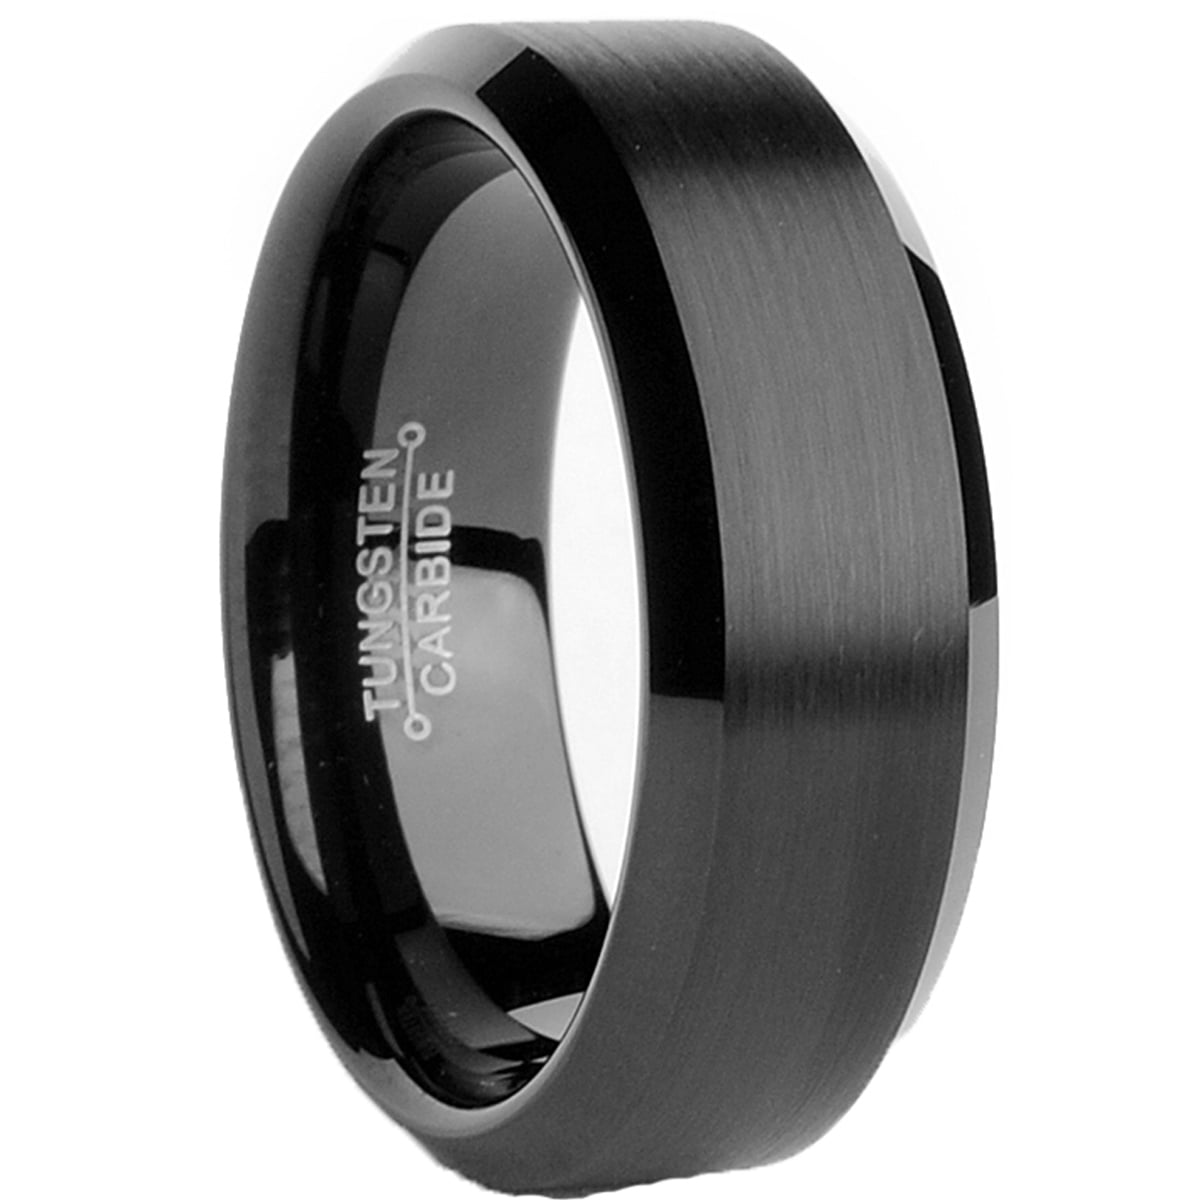 Black Stainless Steel Beveled Edge Yin Yang Glossy Band Ring Size 9-13 